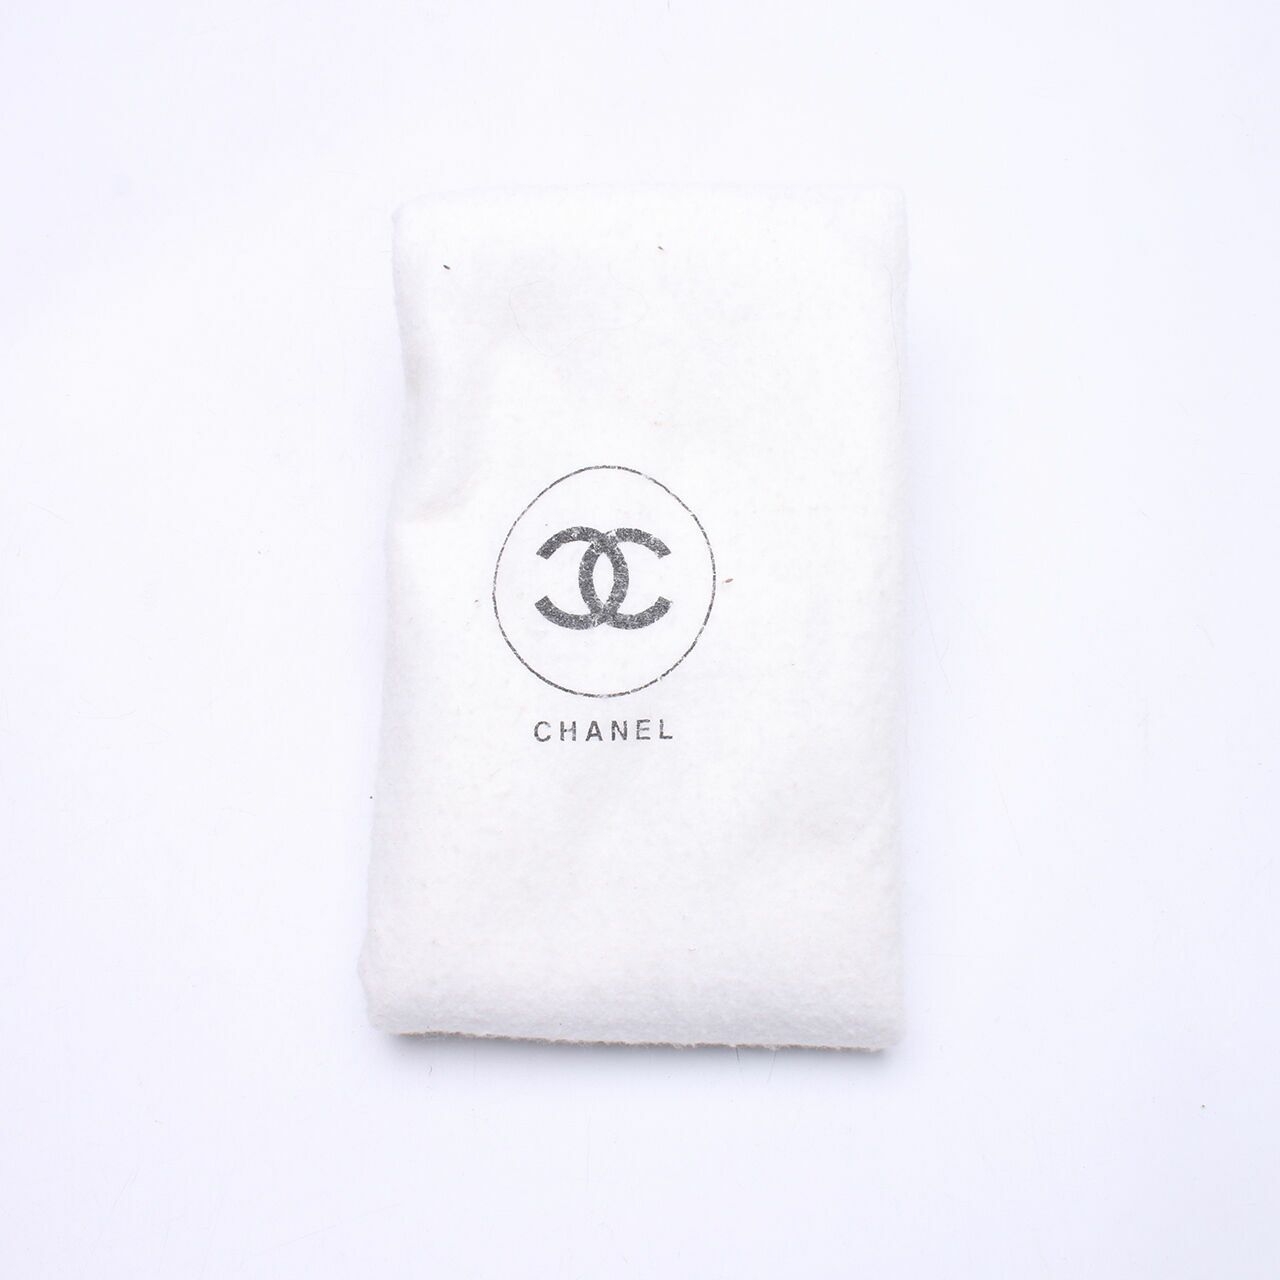 Chanel Vintage Black Patent Leather Briefcase Handbag